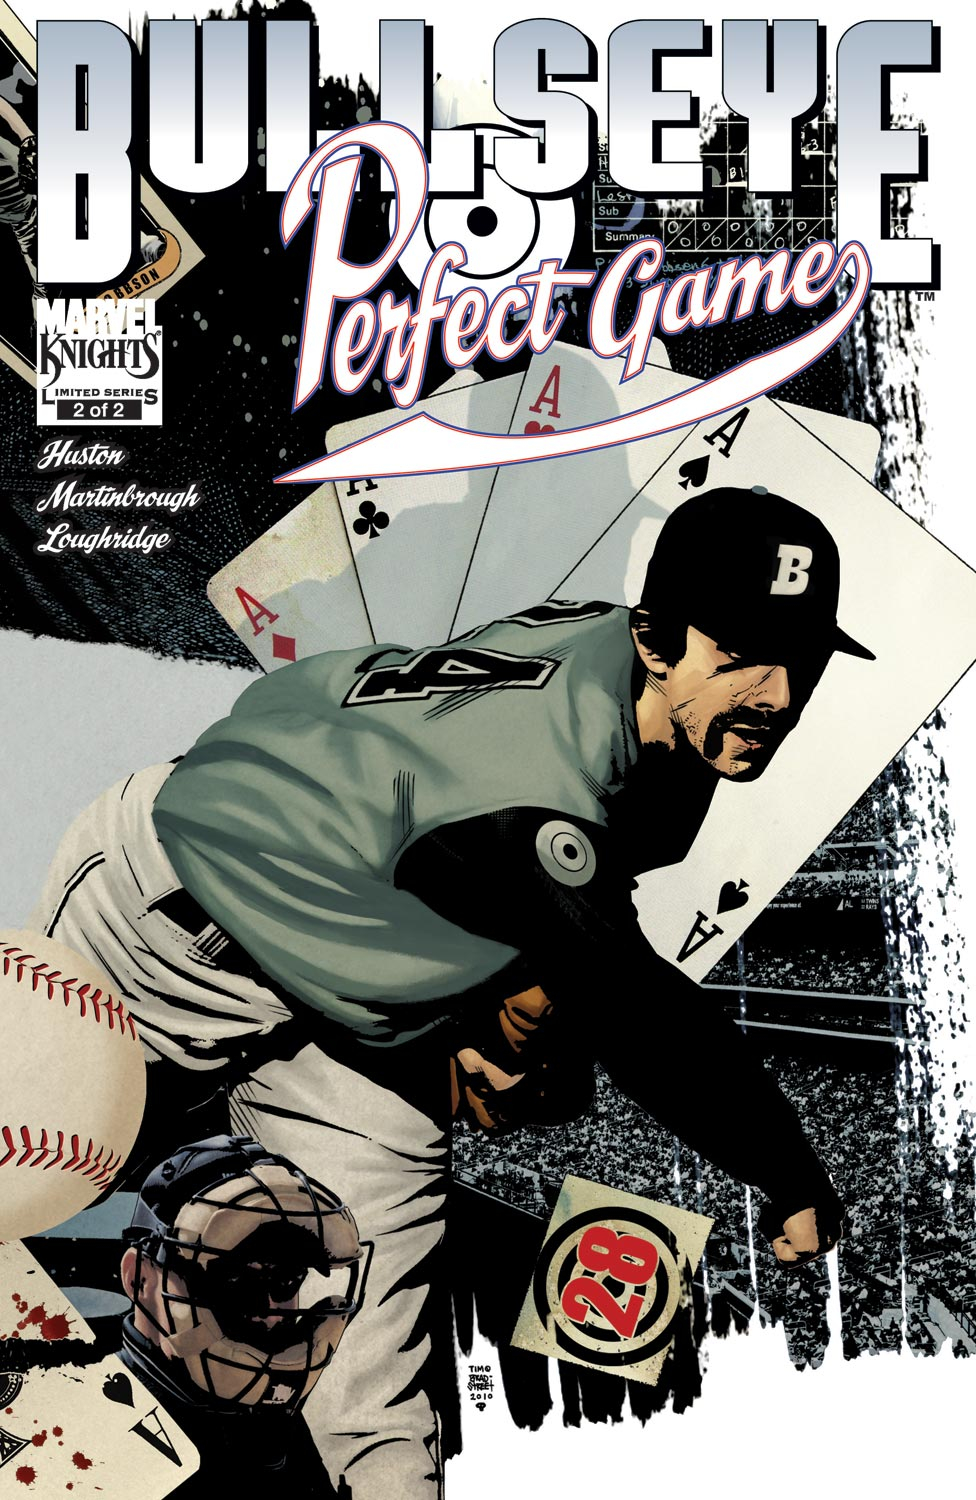 Bullseye: Perfect Game (2010) #2